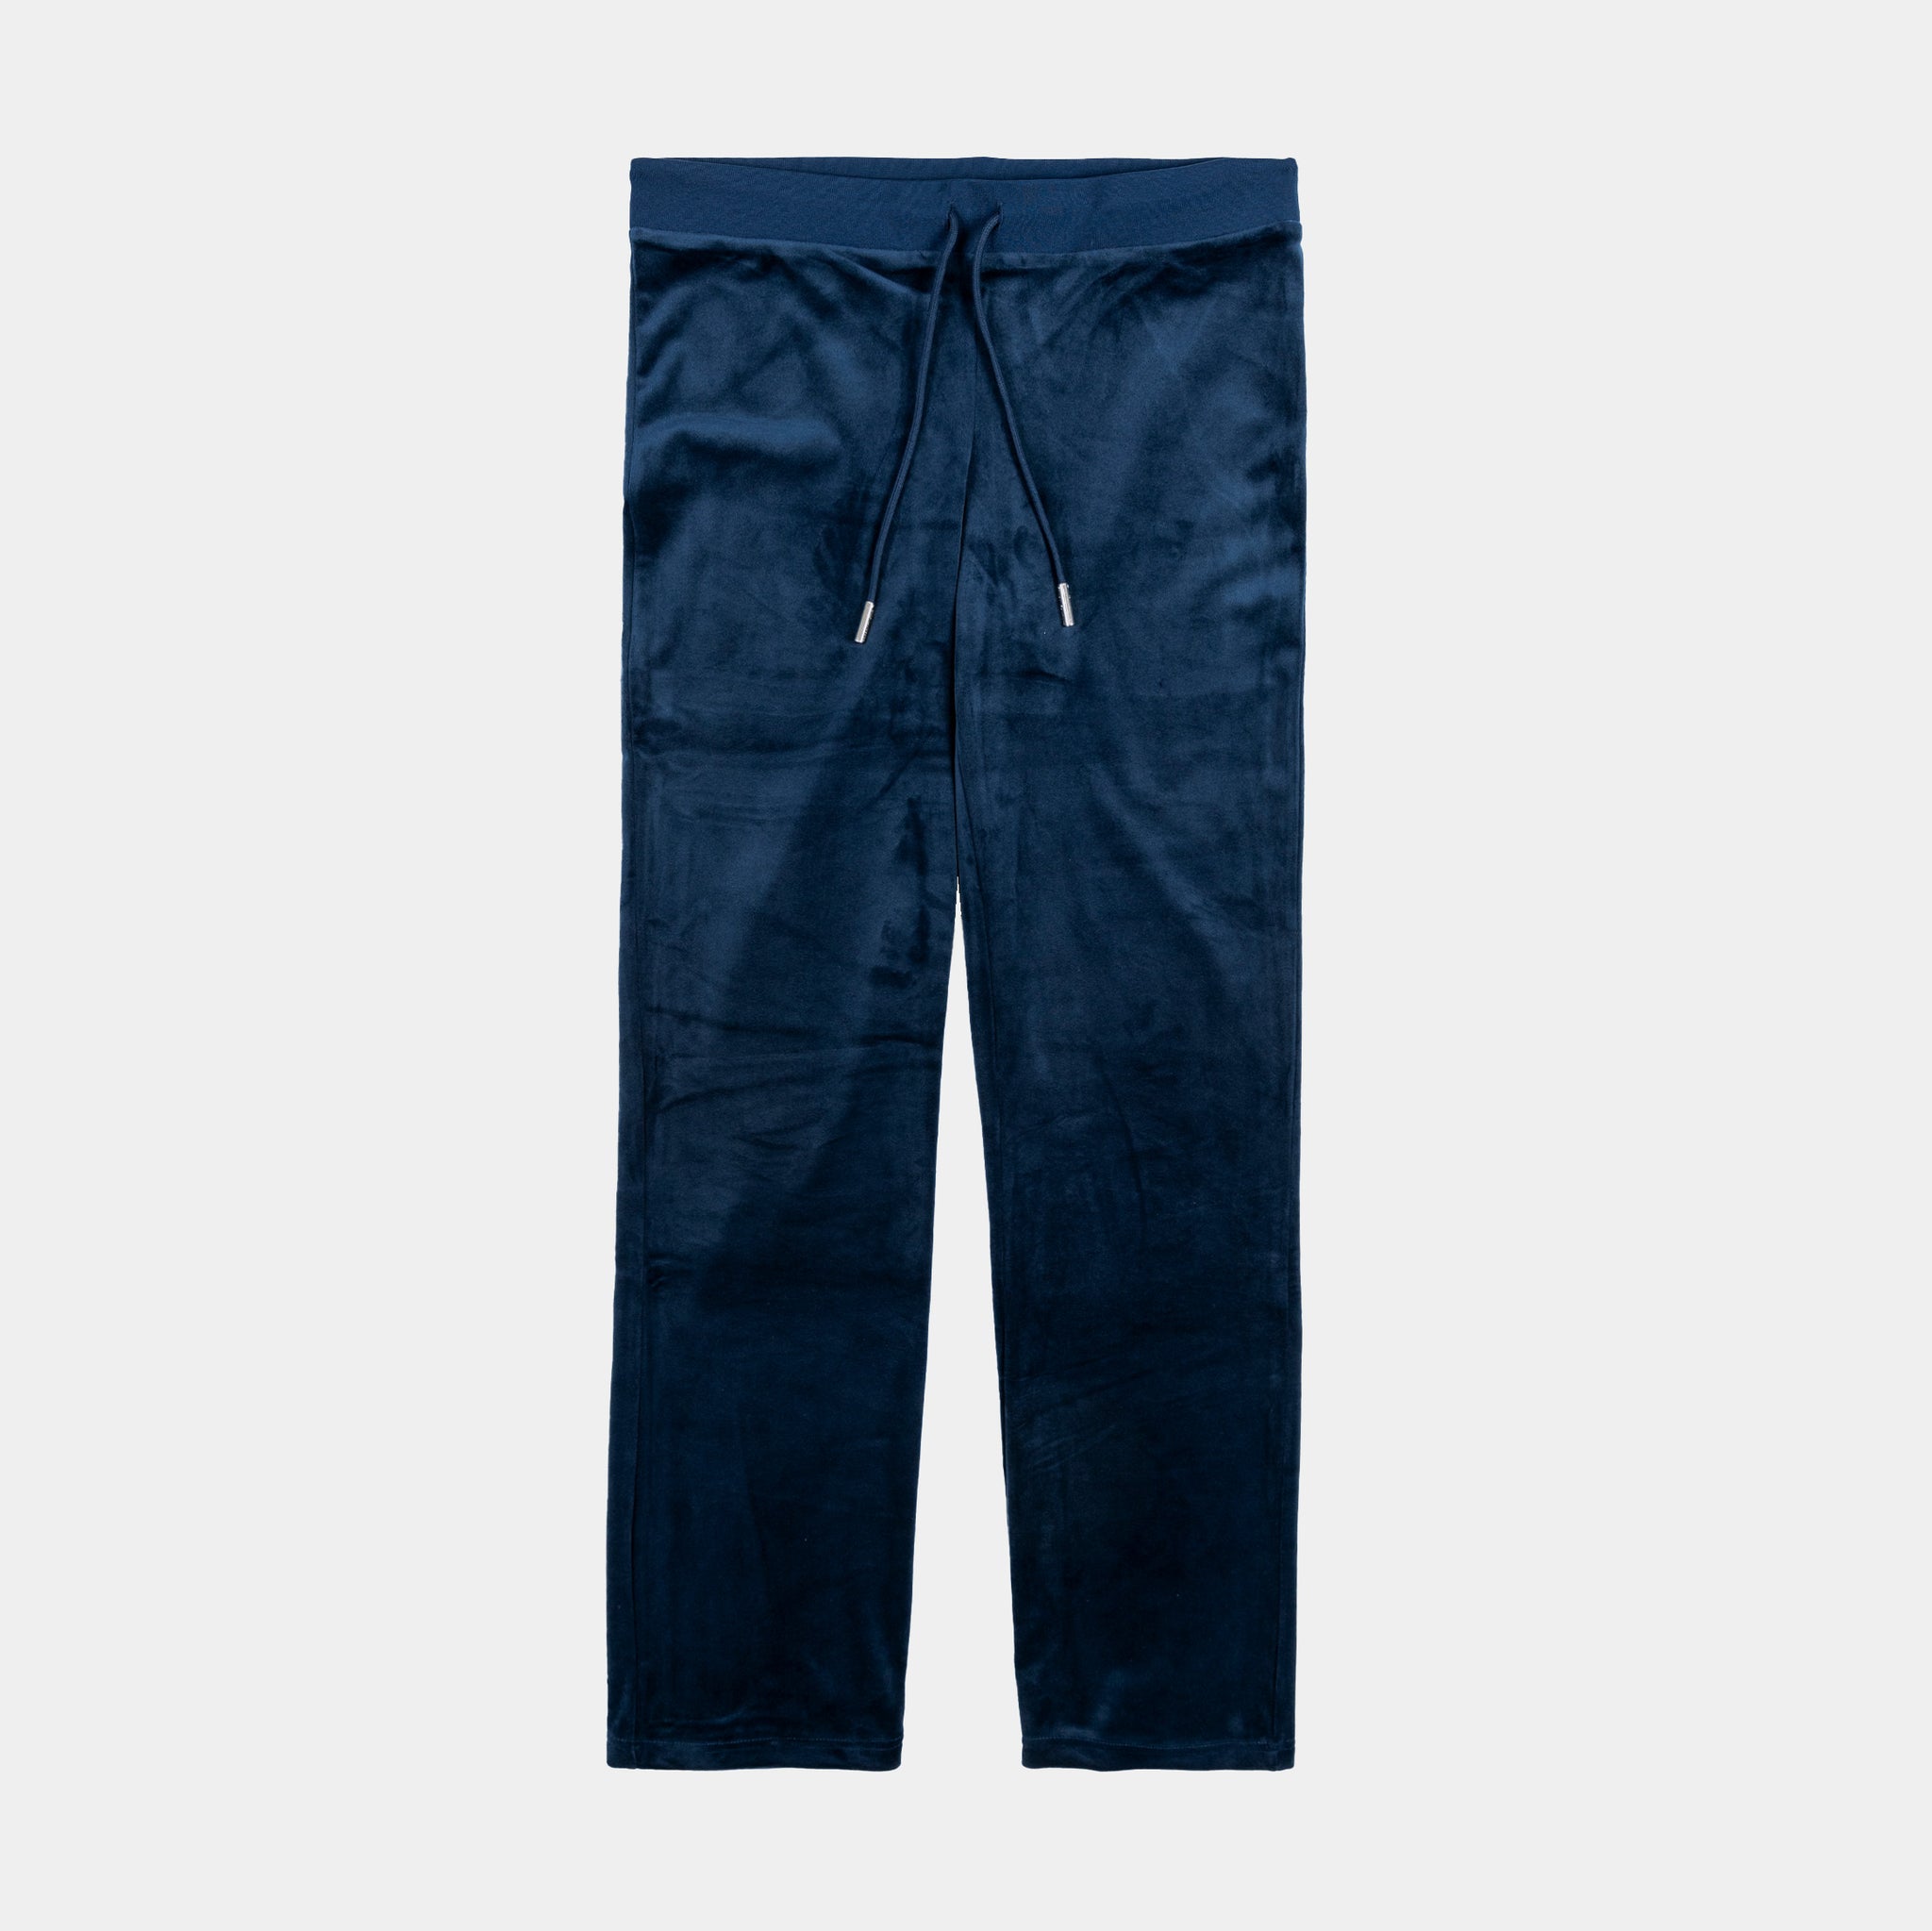 SIKSILK VELOUR TRACK PANTS - Tracksuit bottoms - navy/dark blue 